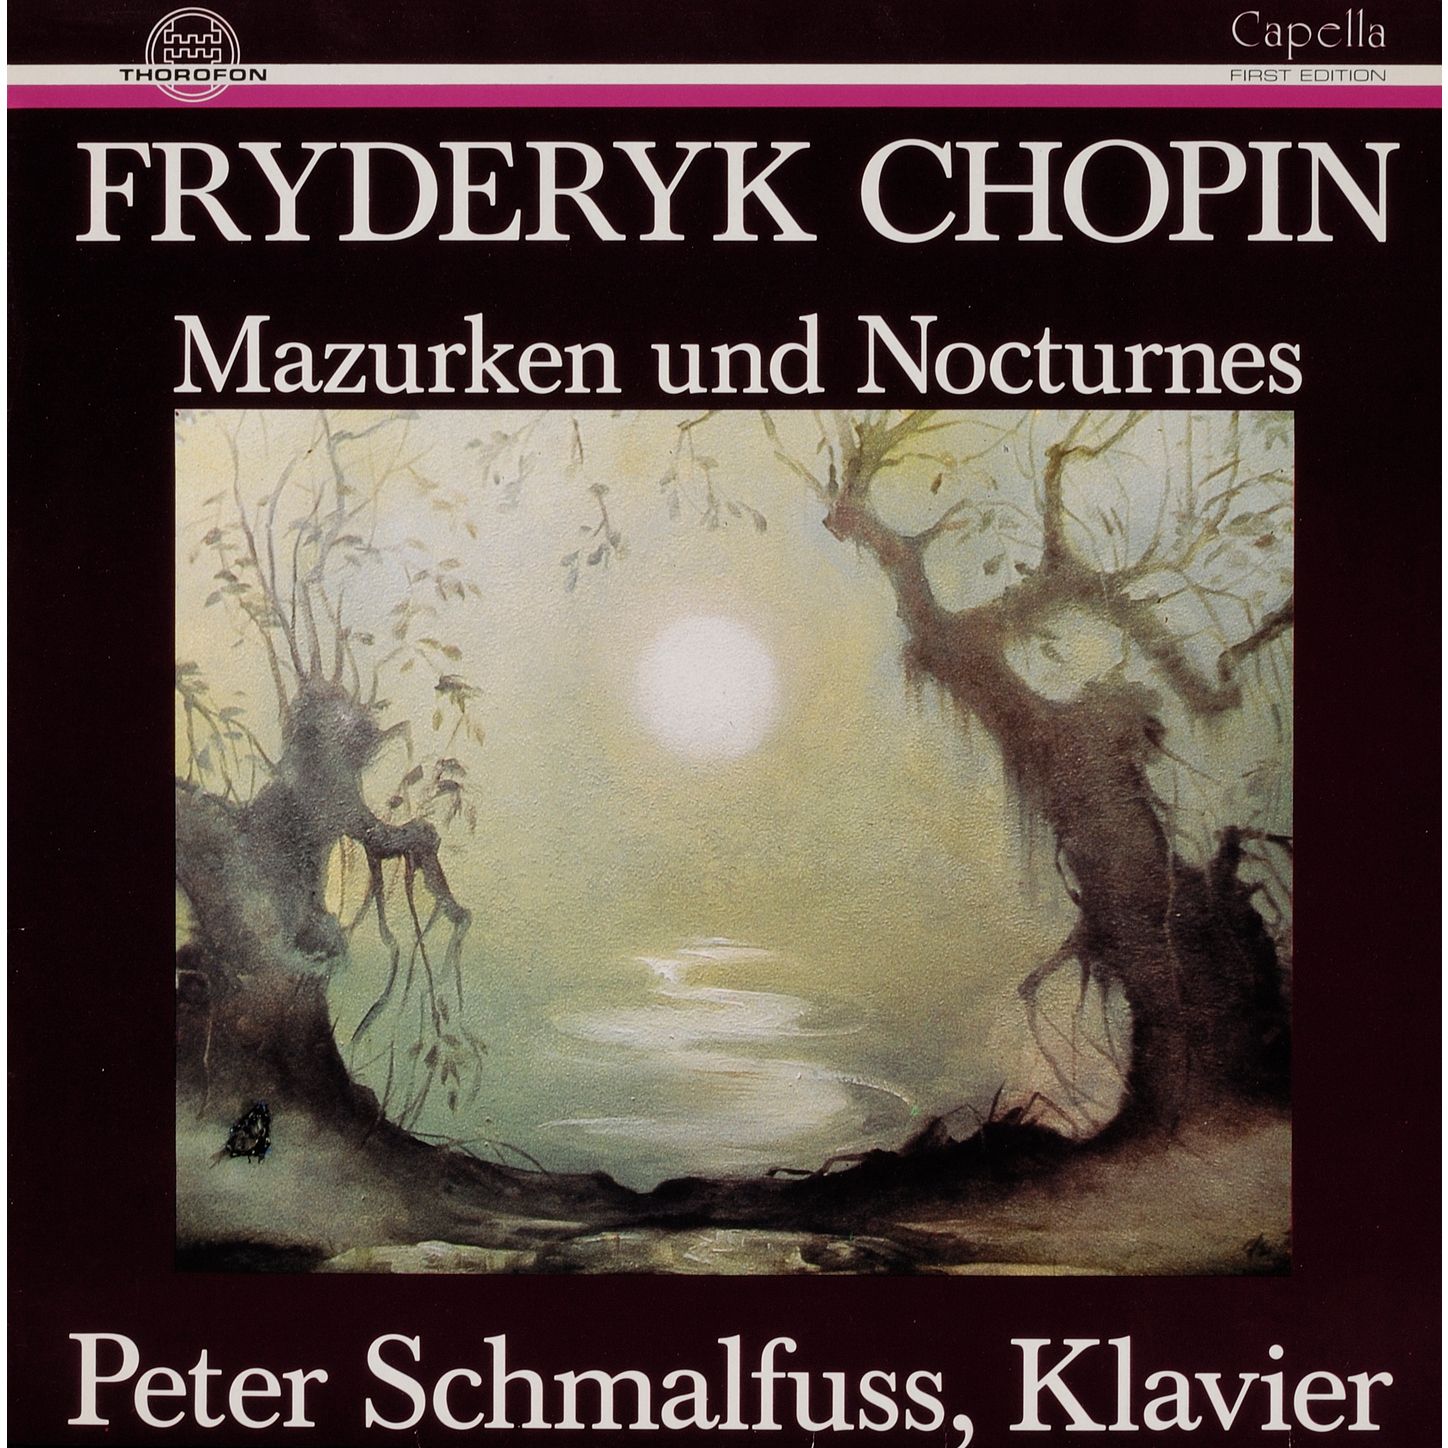 Drei Mazurken fü r Klavier in G Major, Op. 50, No. 1